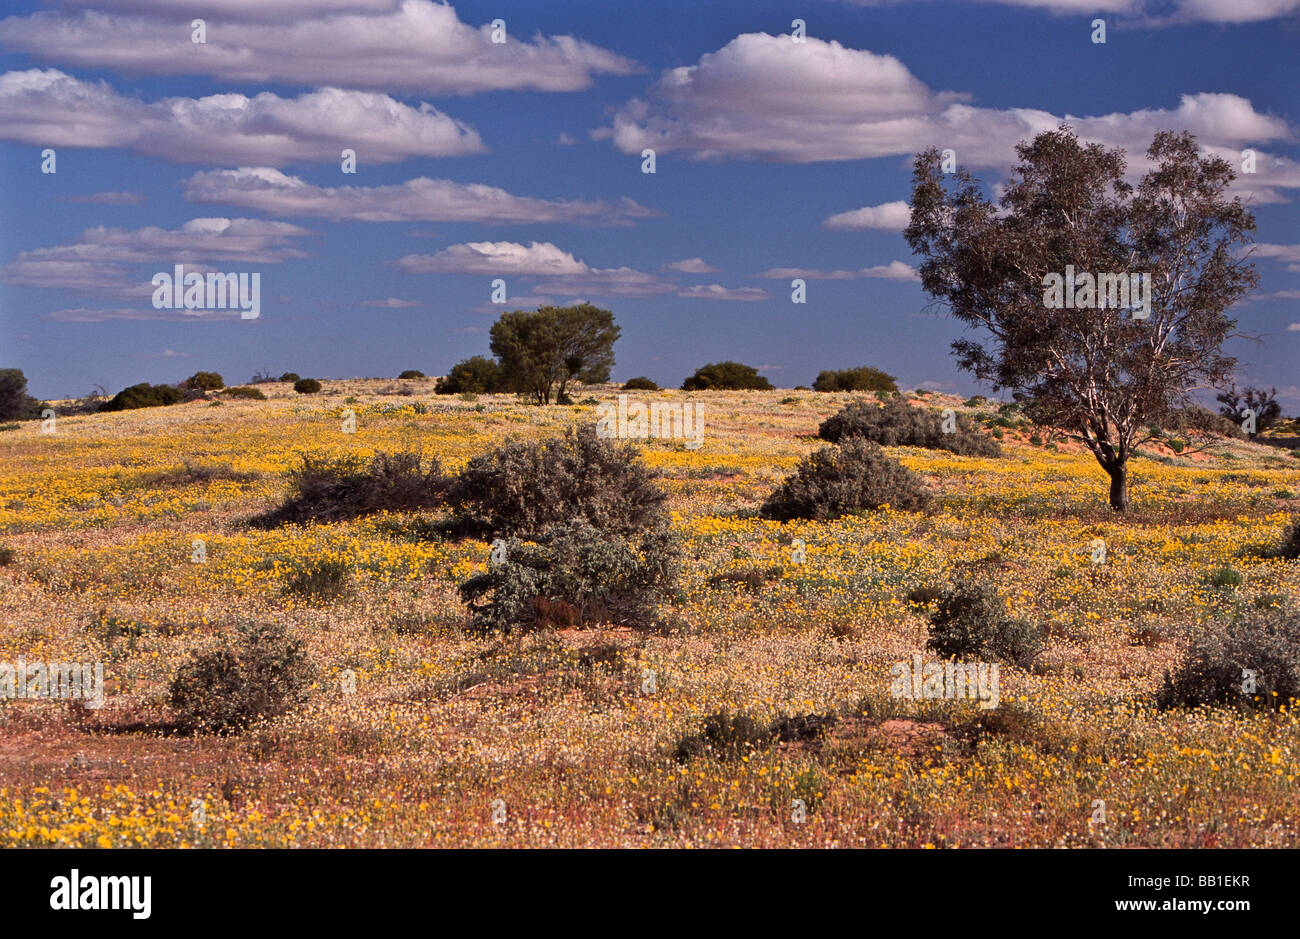 Wildflowers in desert sands, Central Australia Stock Photo